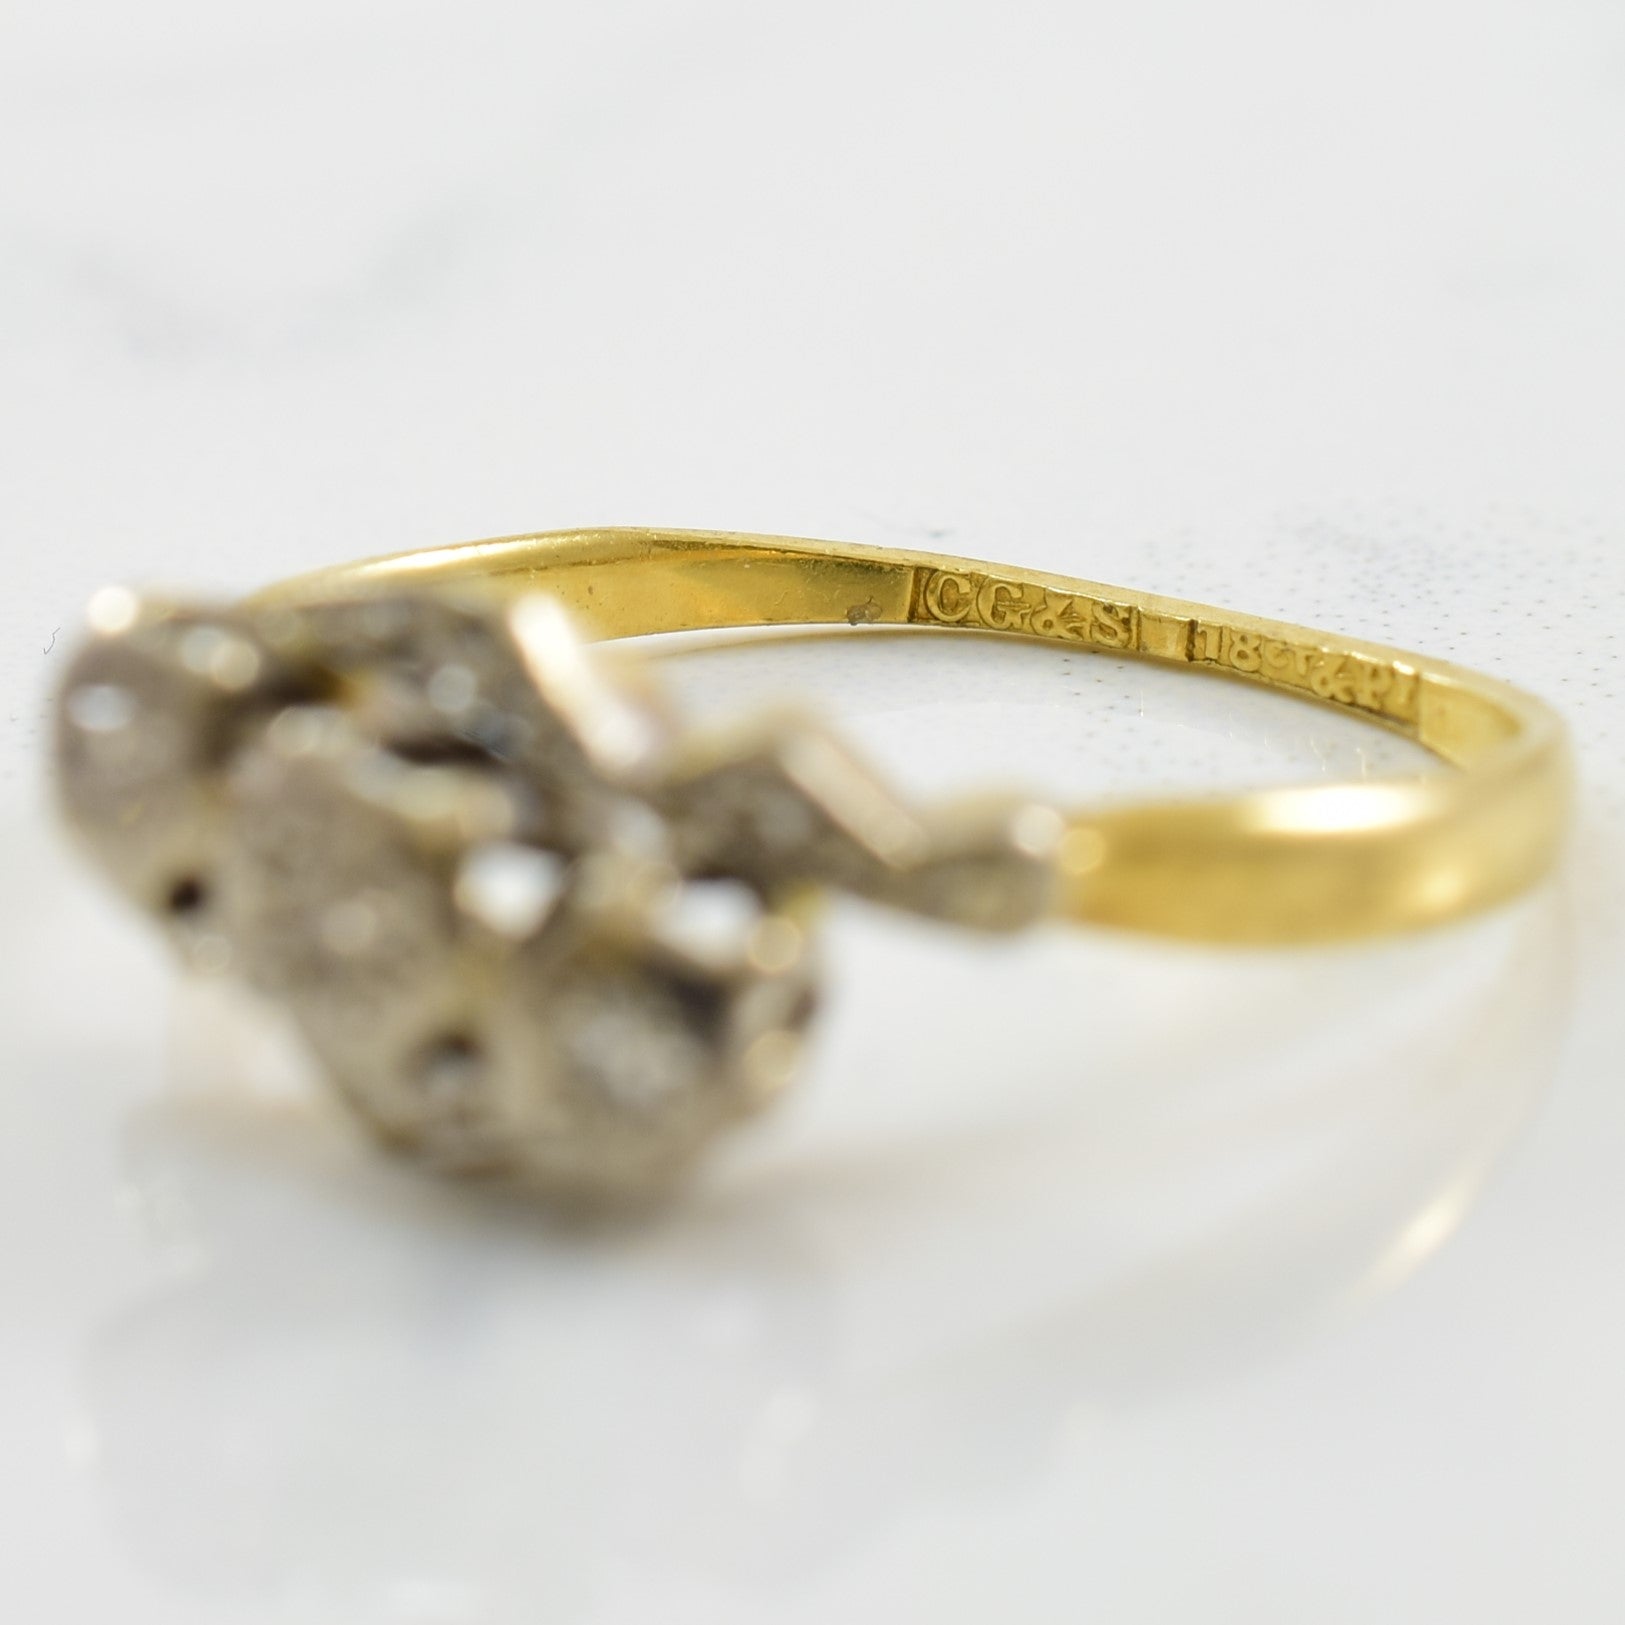 Charles Green & Son' Diamond Bypass Ring Circa 1920s | 0.04ctw | SZ 5.5 |